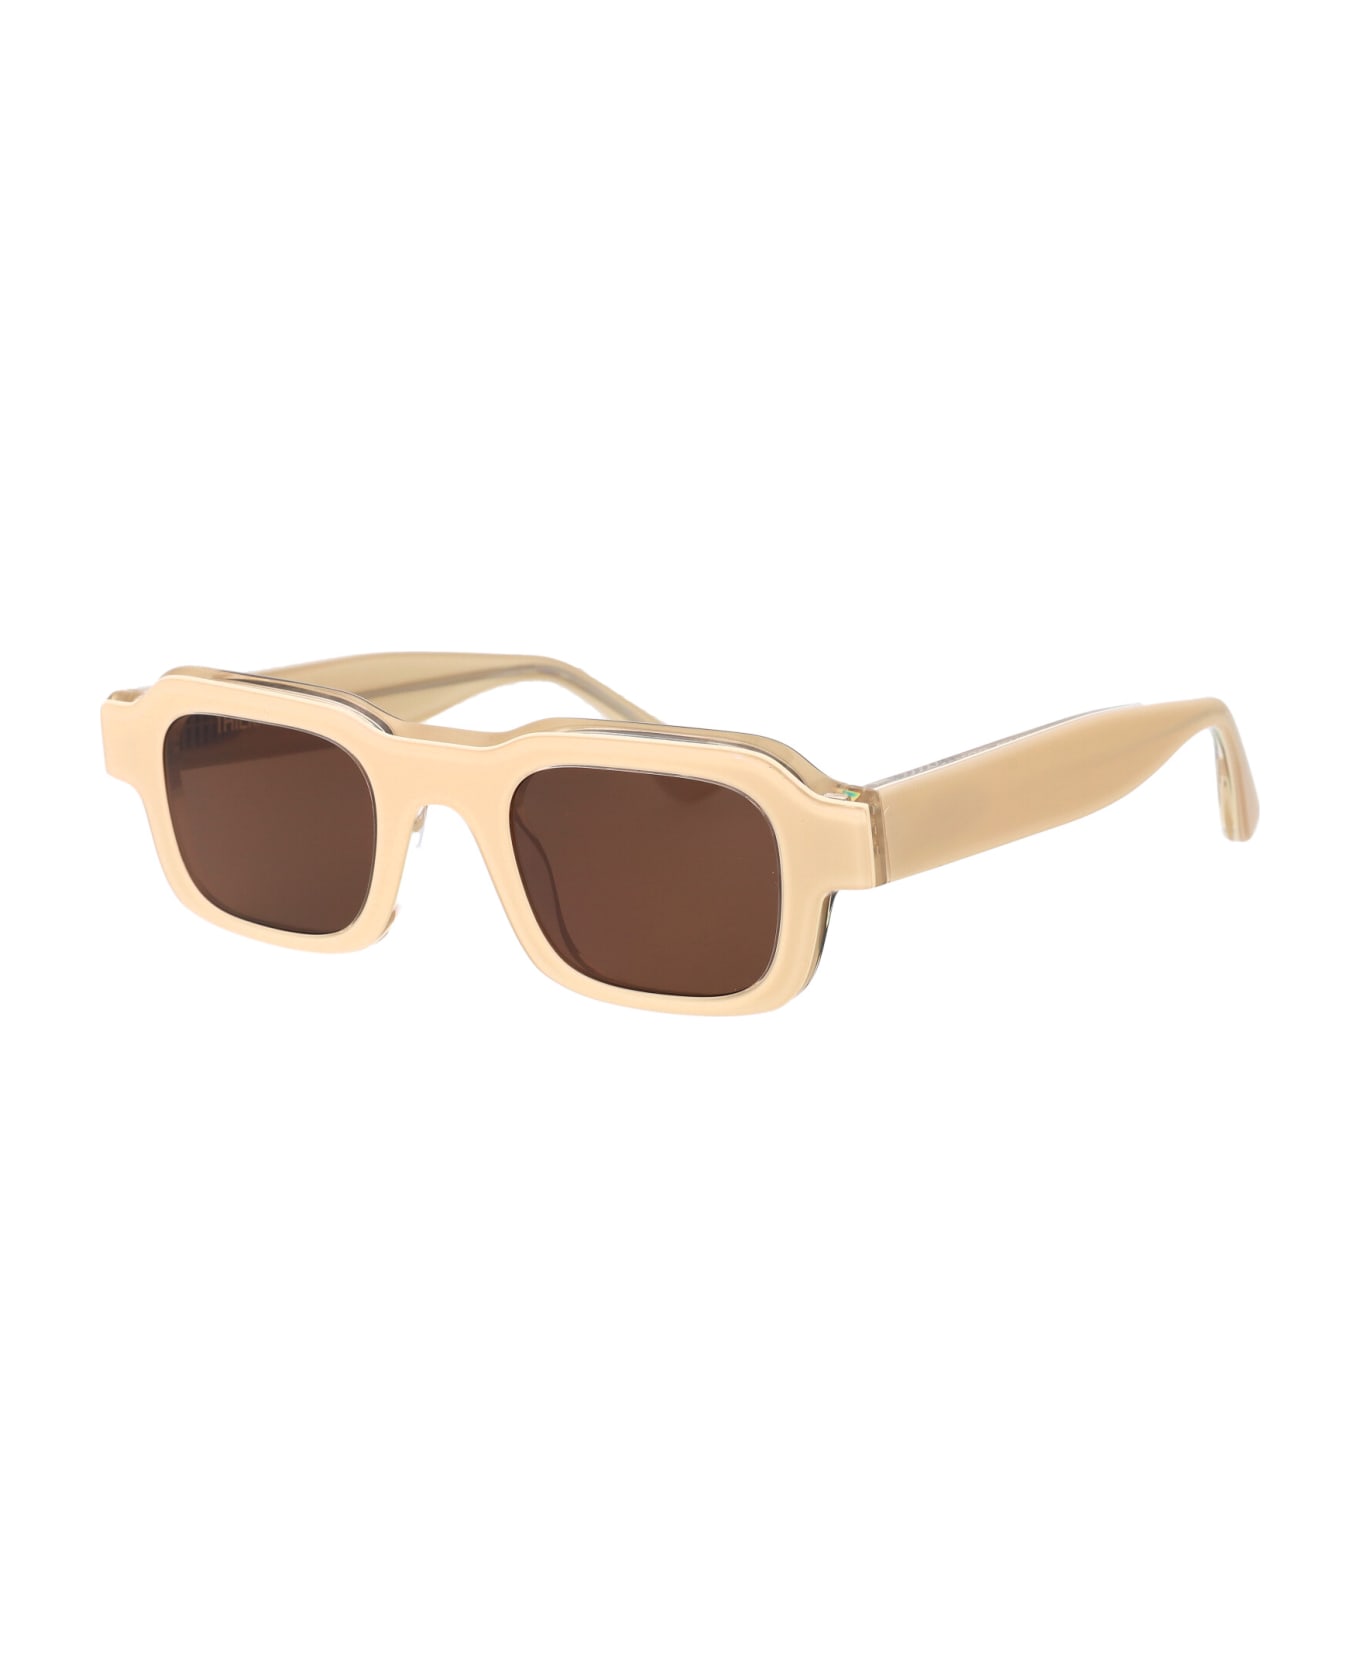 Thierry Lasry Flexxxy Sunglasses - 125 BROWN